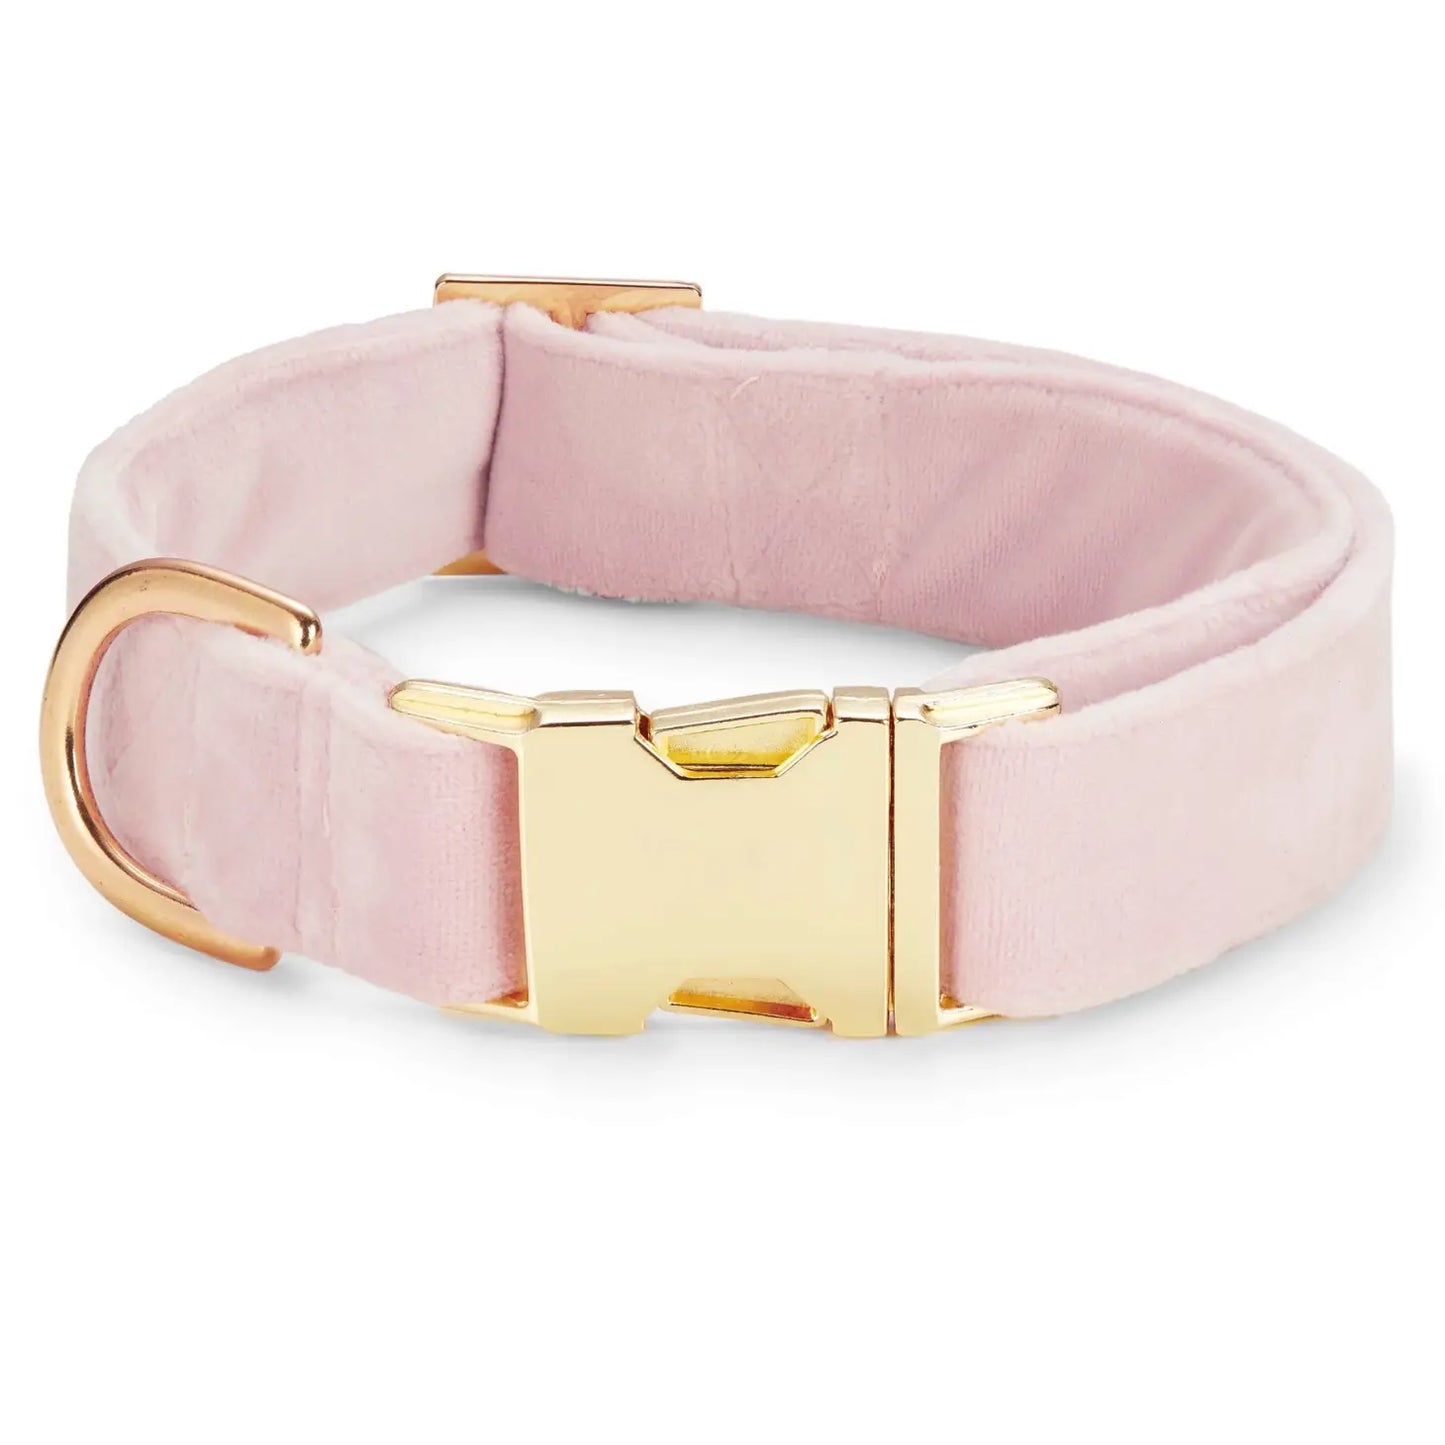 Blush Pink Velvet Dog Collar By The Foggy Dog